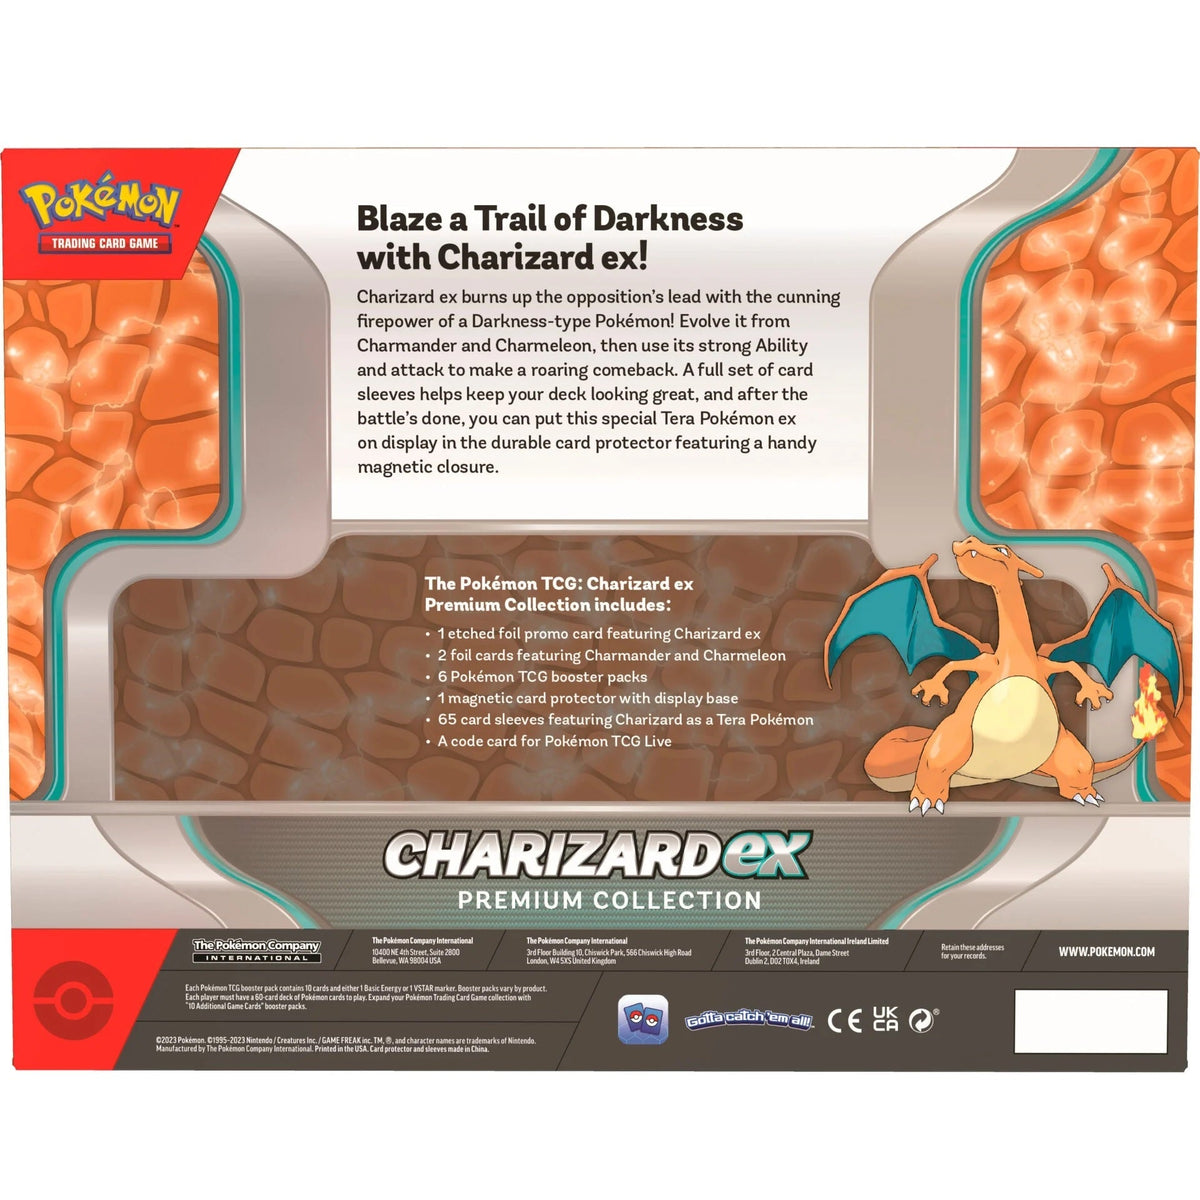 Pokemon TCG: Charizard EX Premium Collection-The Pokémon Company International-Ace Cards &amp; Collectibles